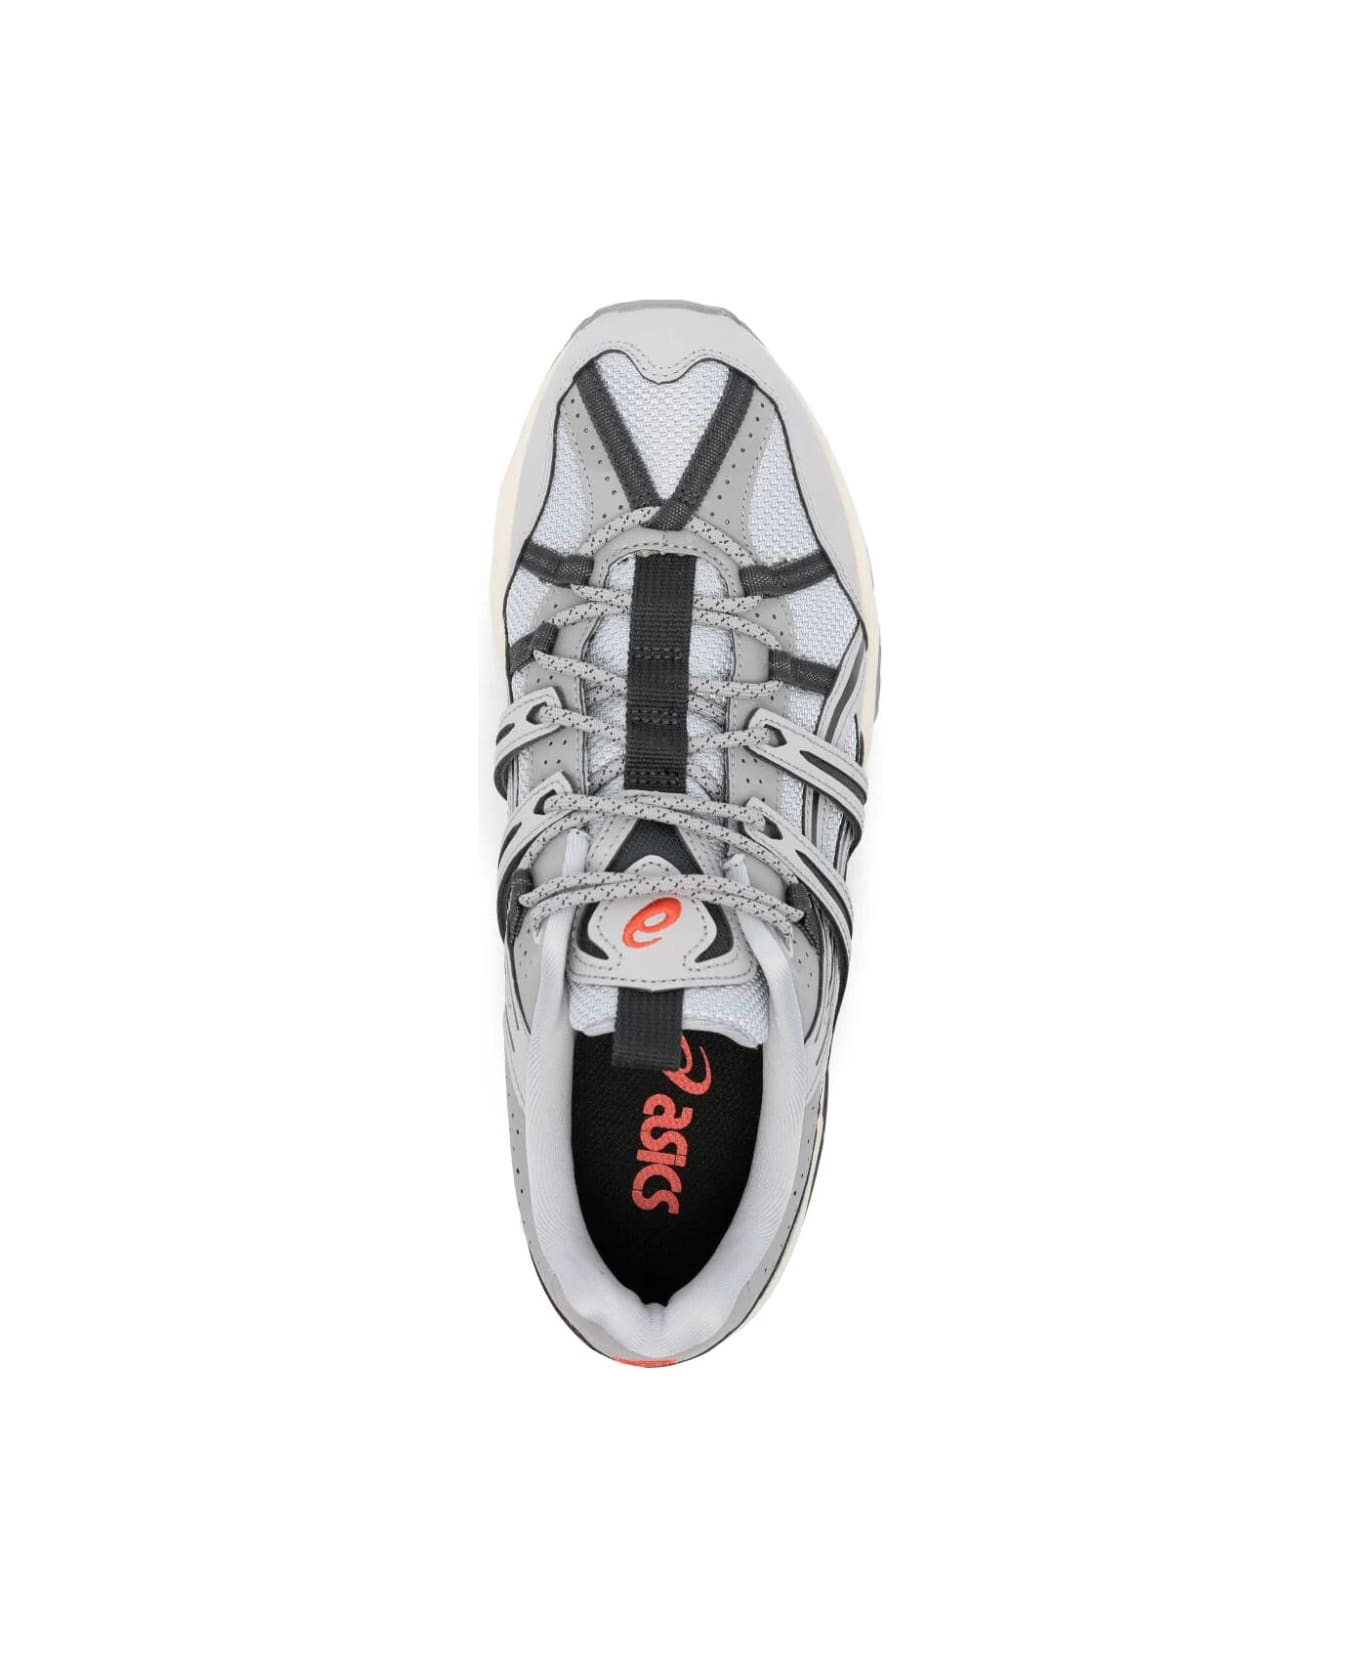 Asics Gel Sonoma 15-50 Sneakers - Cement Grey Graphite Grey スニーカー